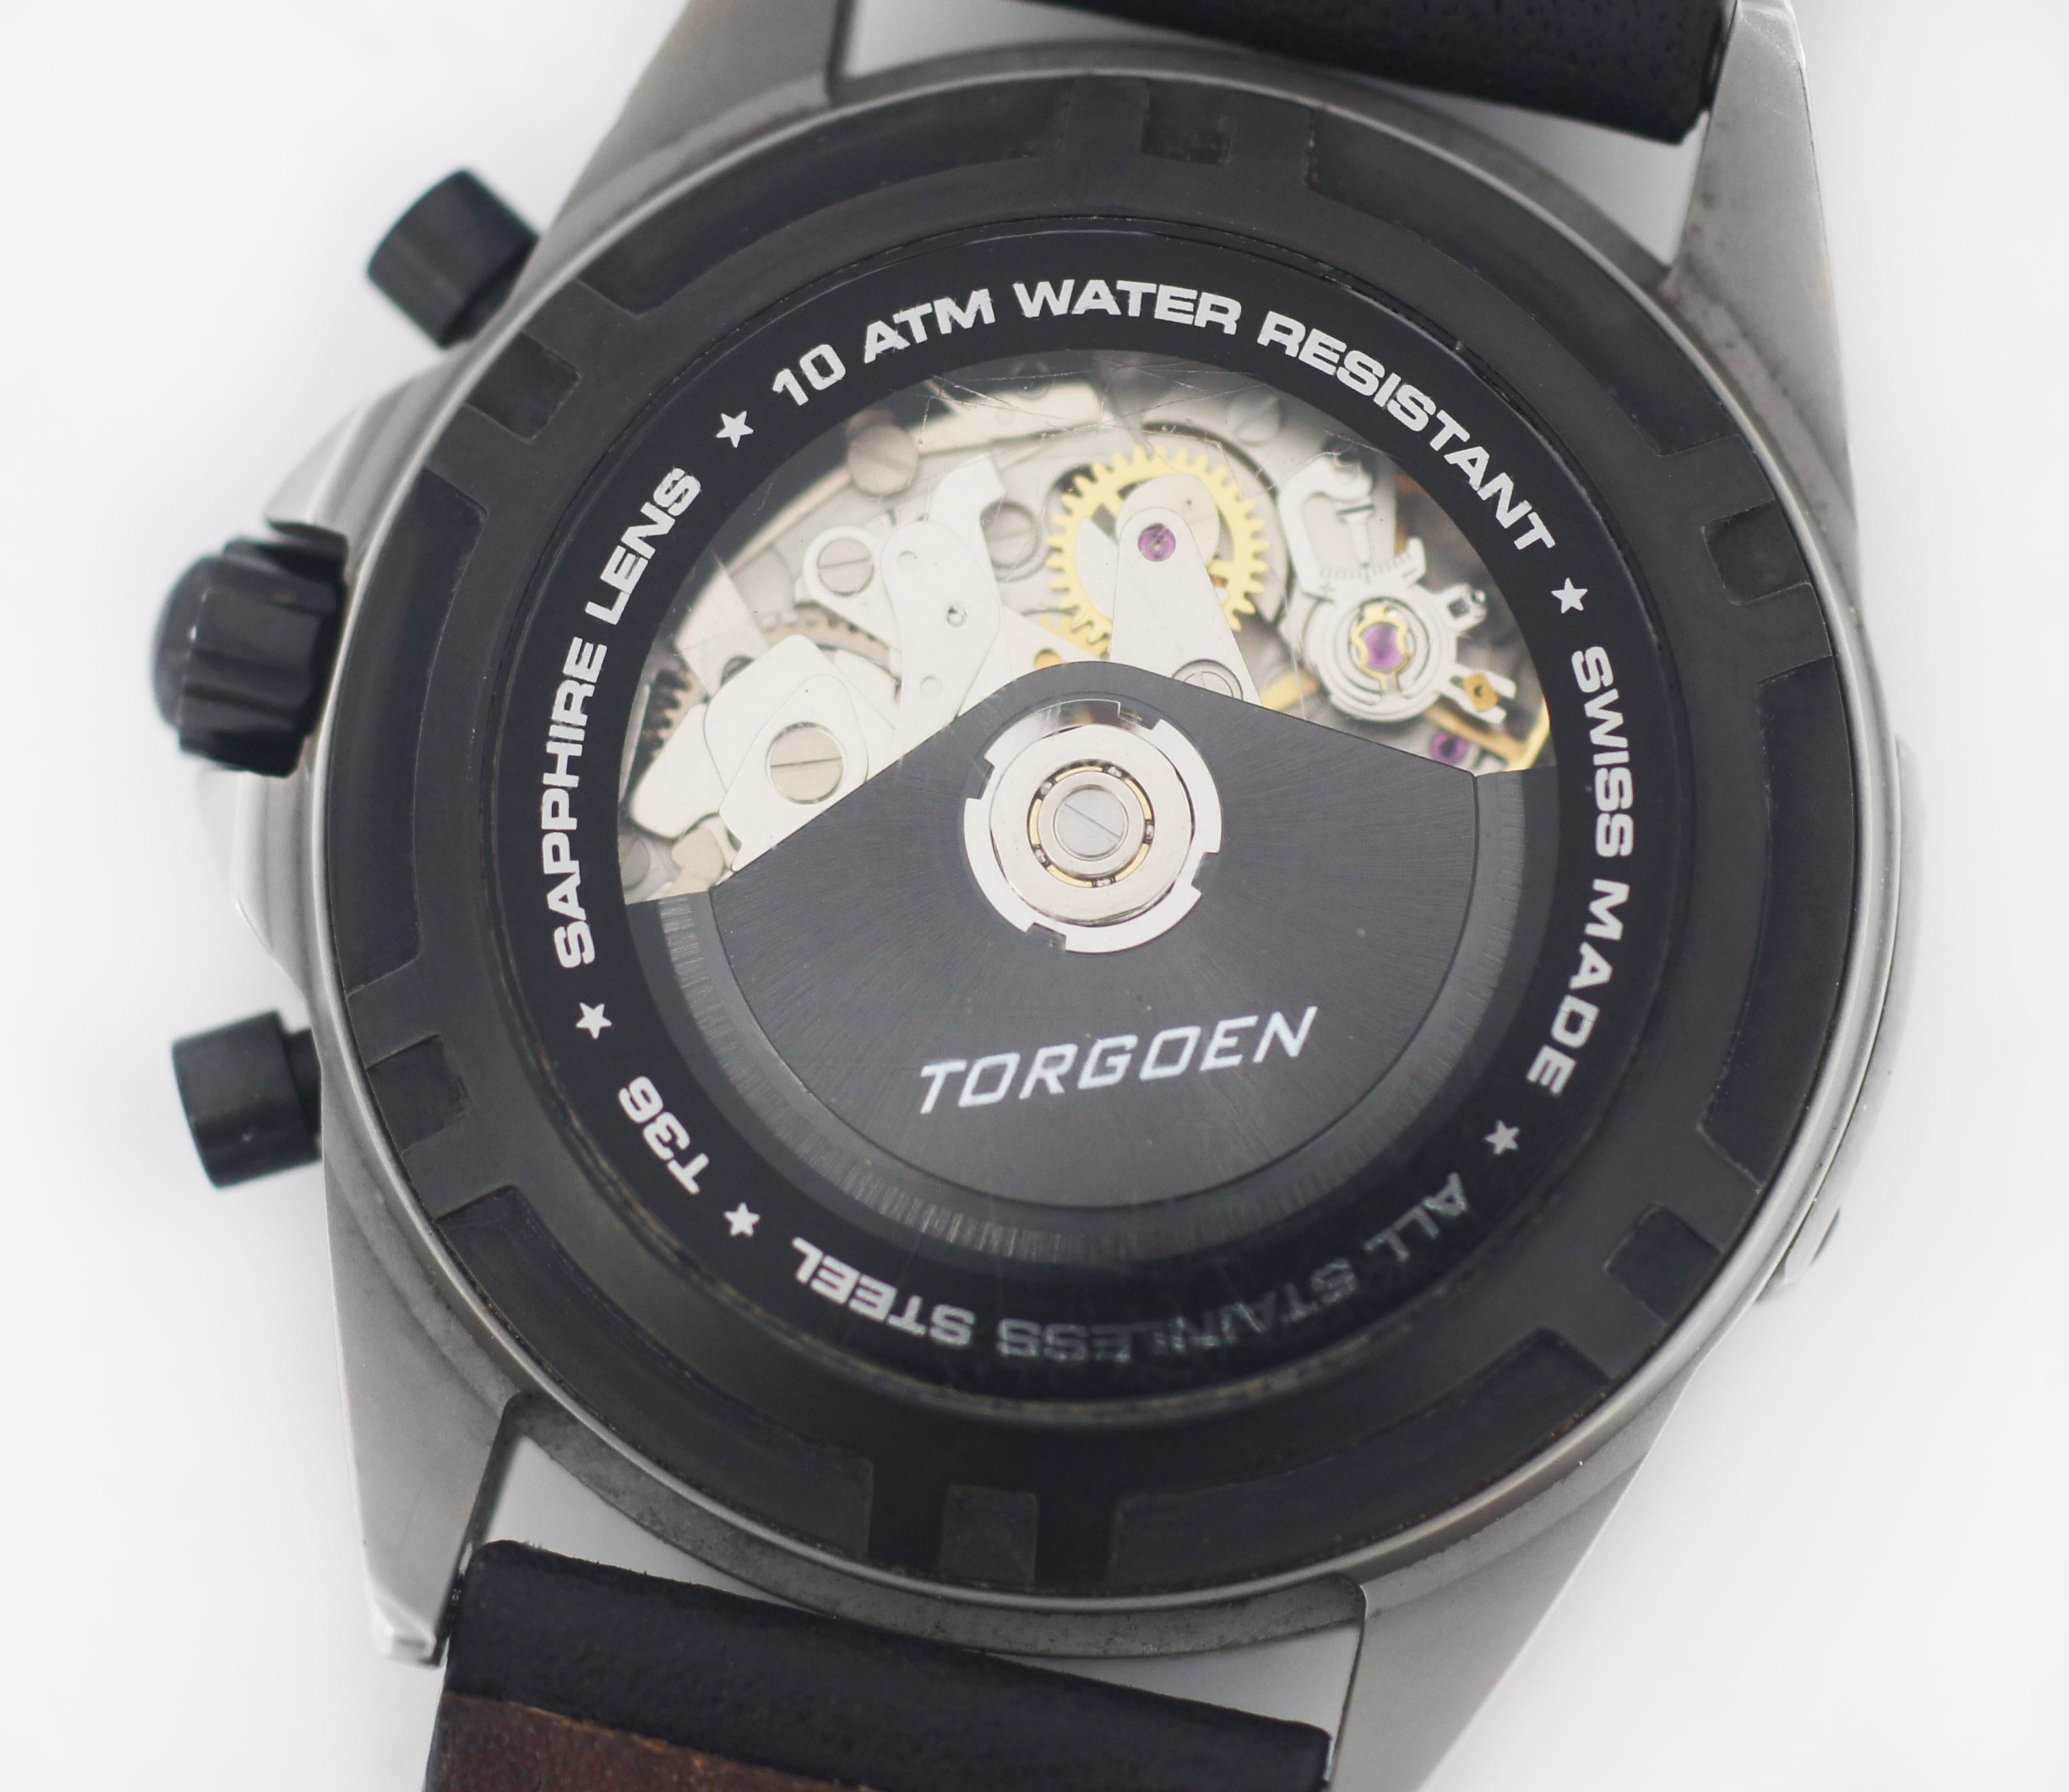 torgoen automatic watches